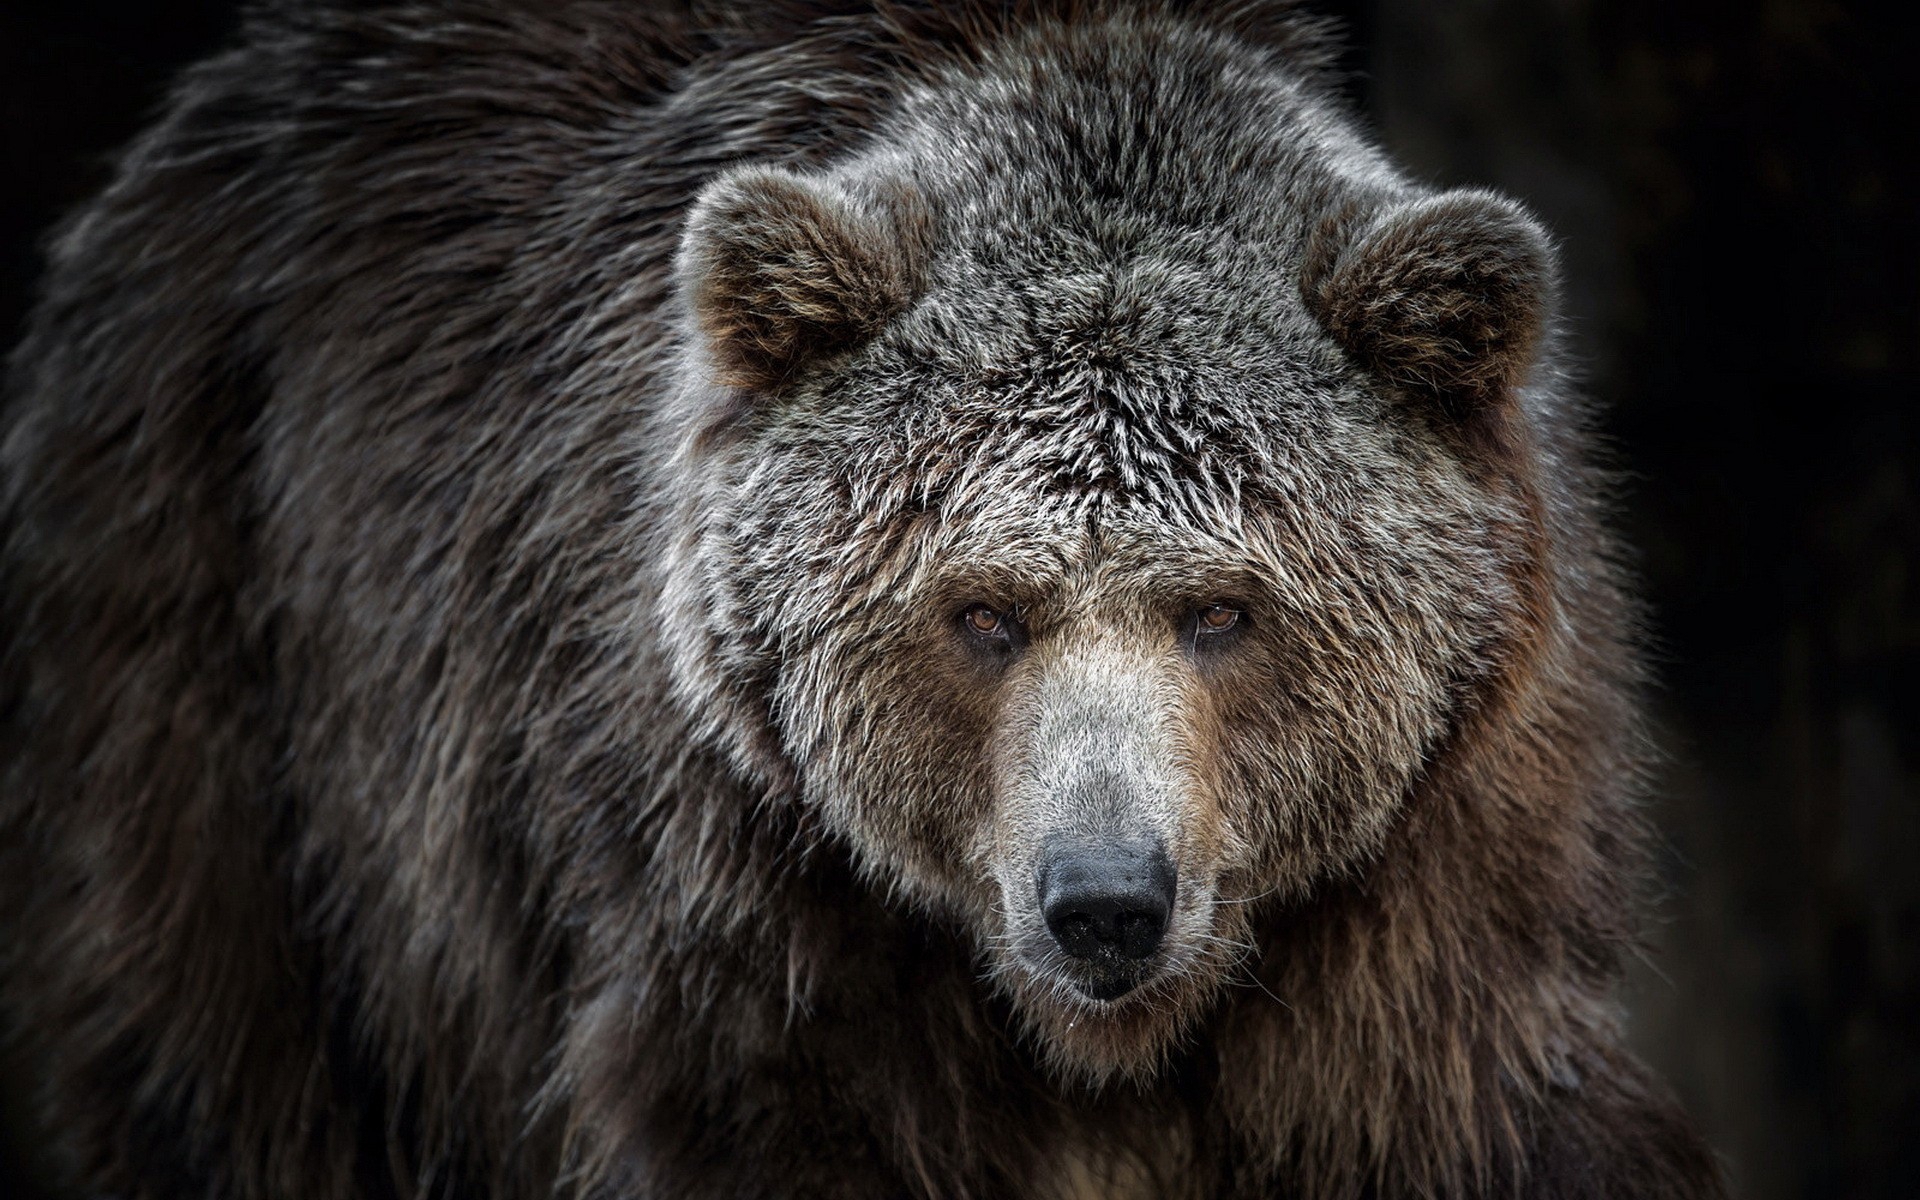 papier peint ours,ours brun,ours,grizzly,animal terrestre,la nature